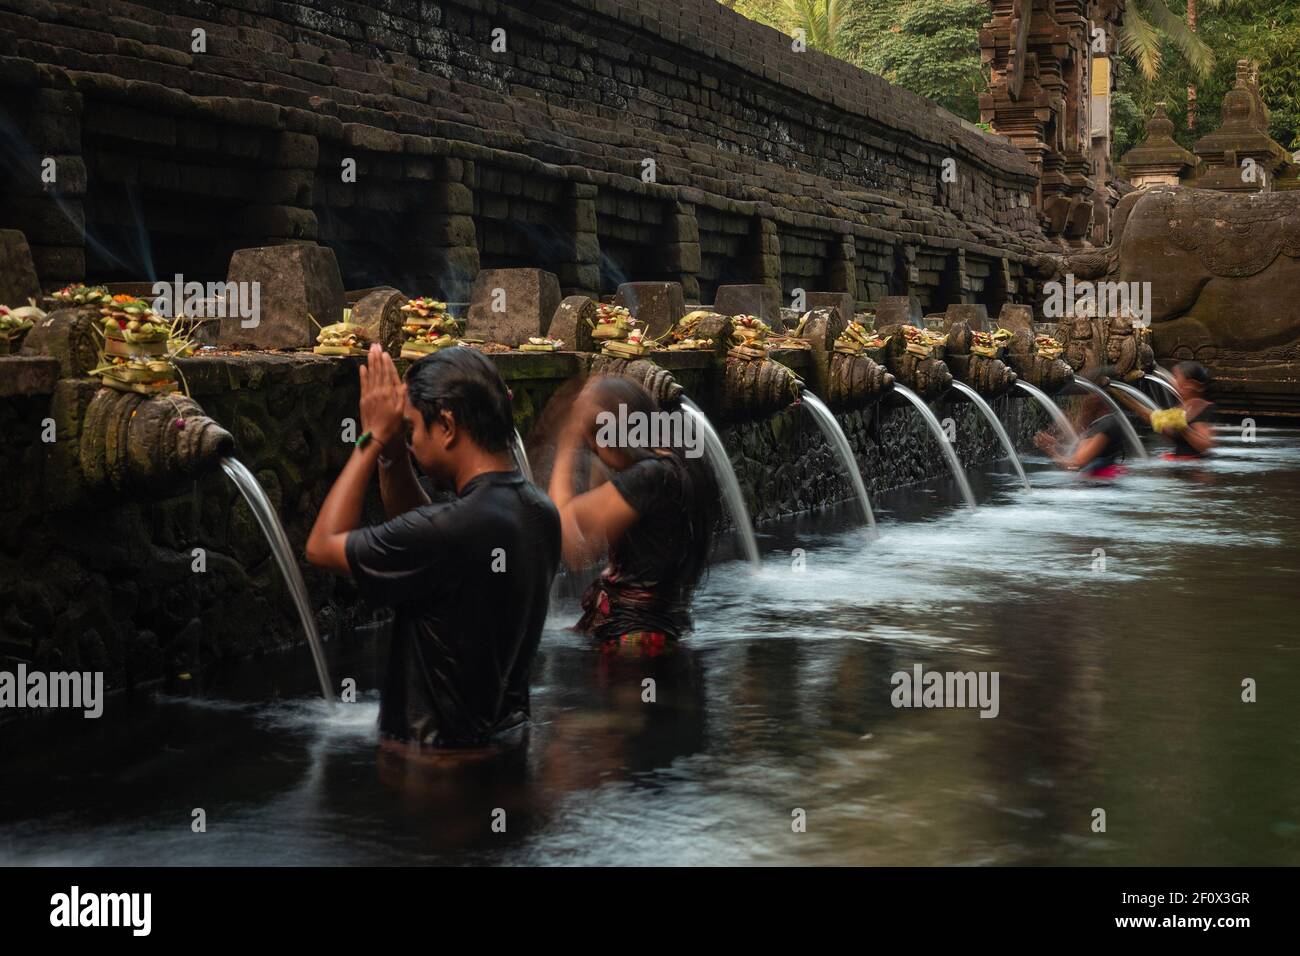 Hindu Balinese pilgrims praying and bathing at the Holy Spring Water Tirta Empul temple near the town of Tampaksiring in Bali, Indonesia. Stock Photo